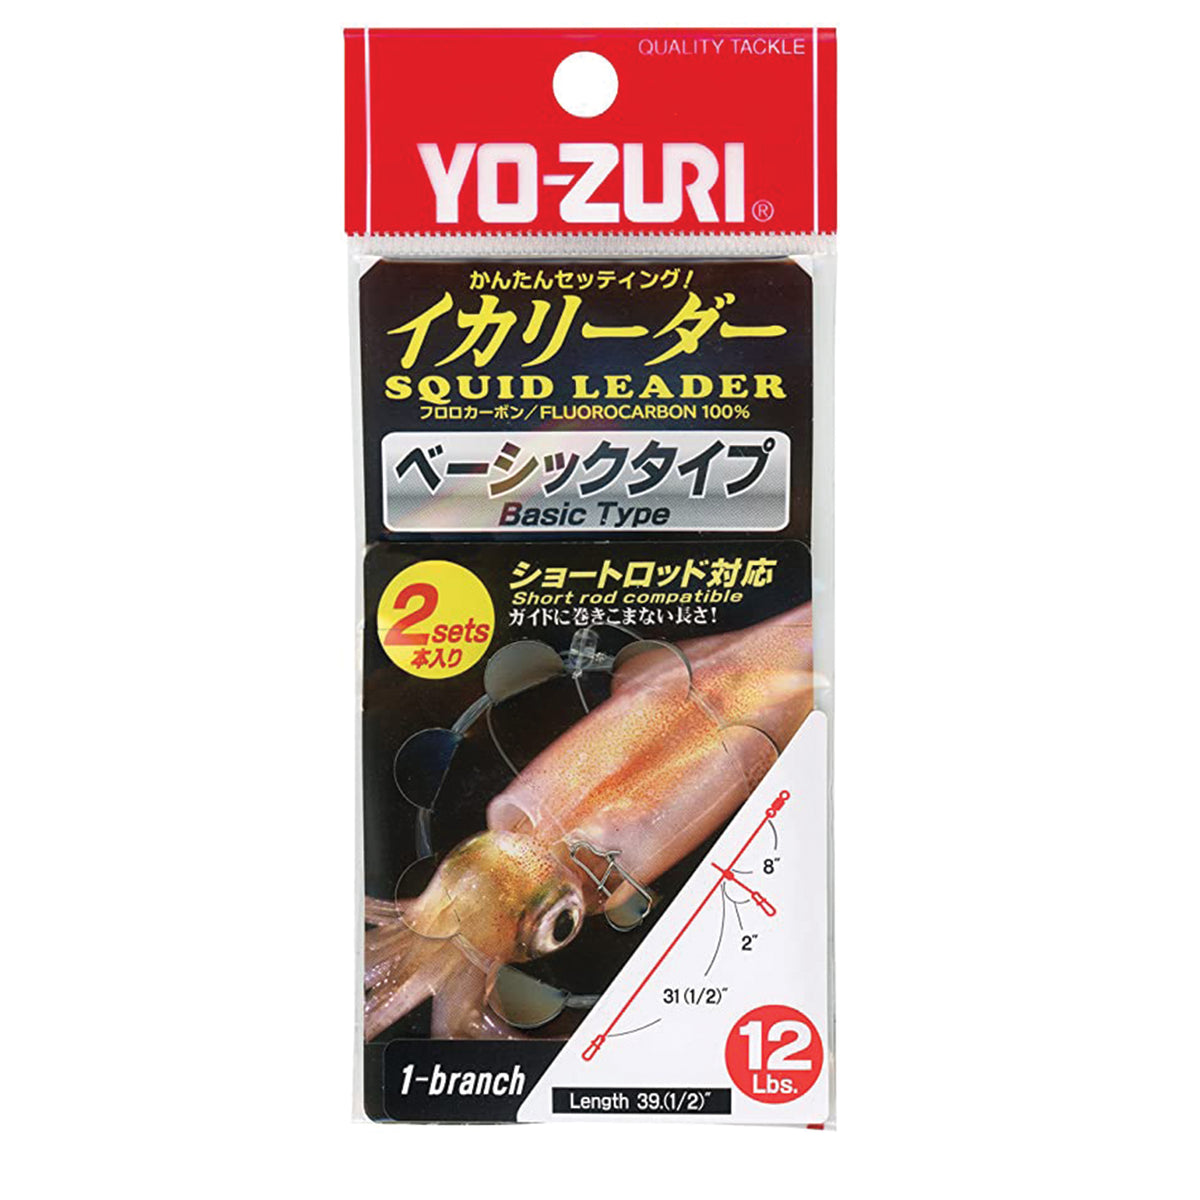 Yozuri Squid Leader